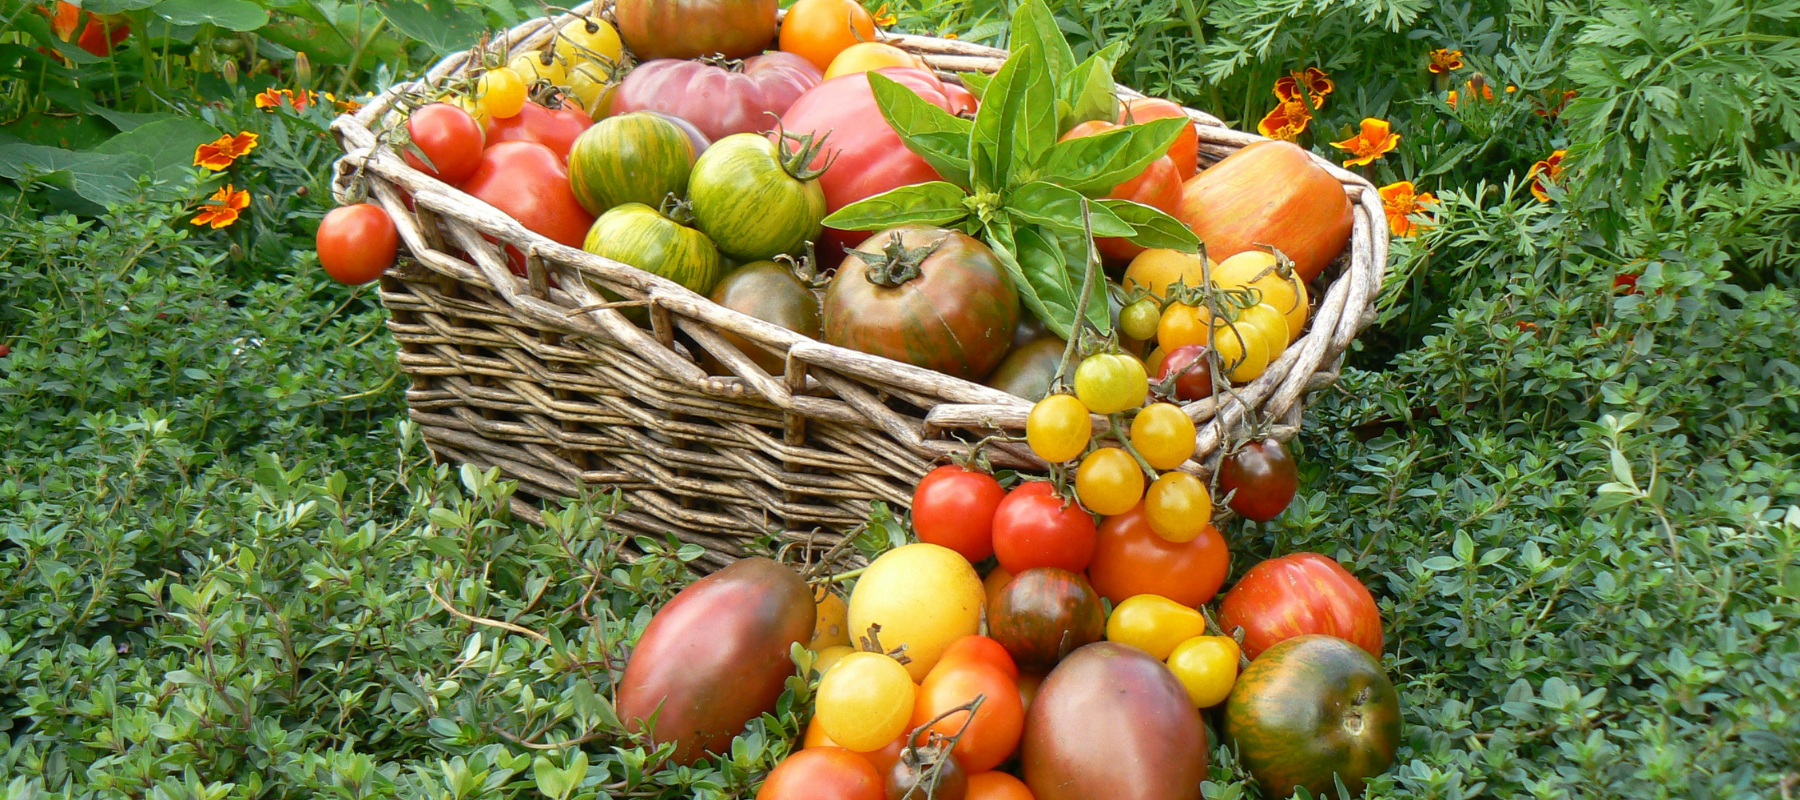 Cheryl grows over 60 tomato varieties